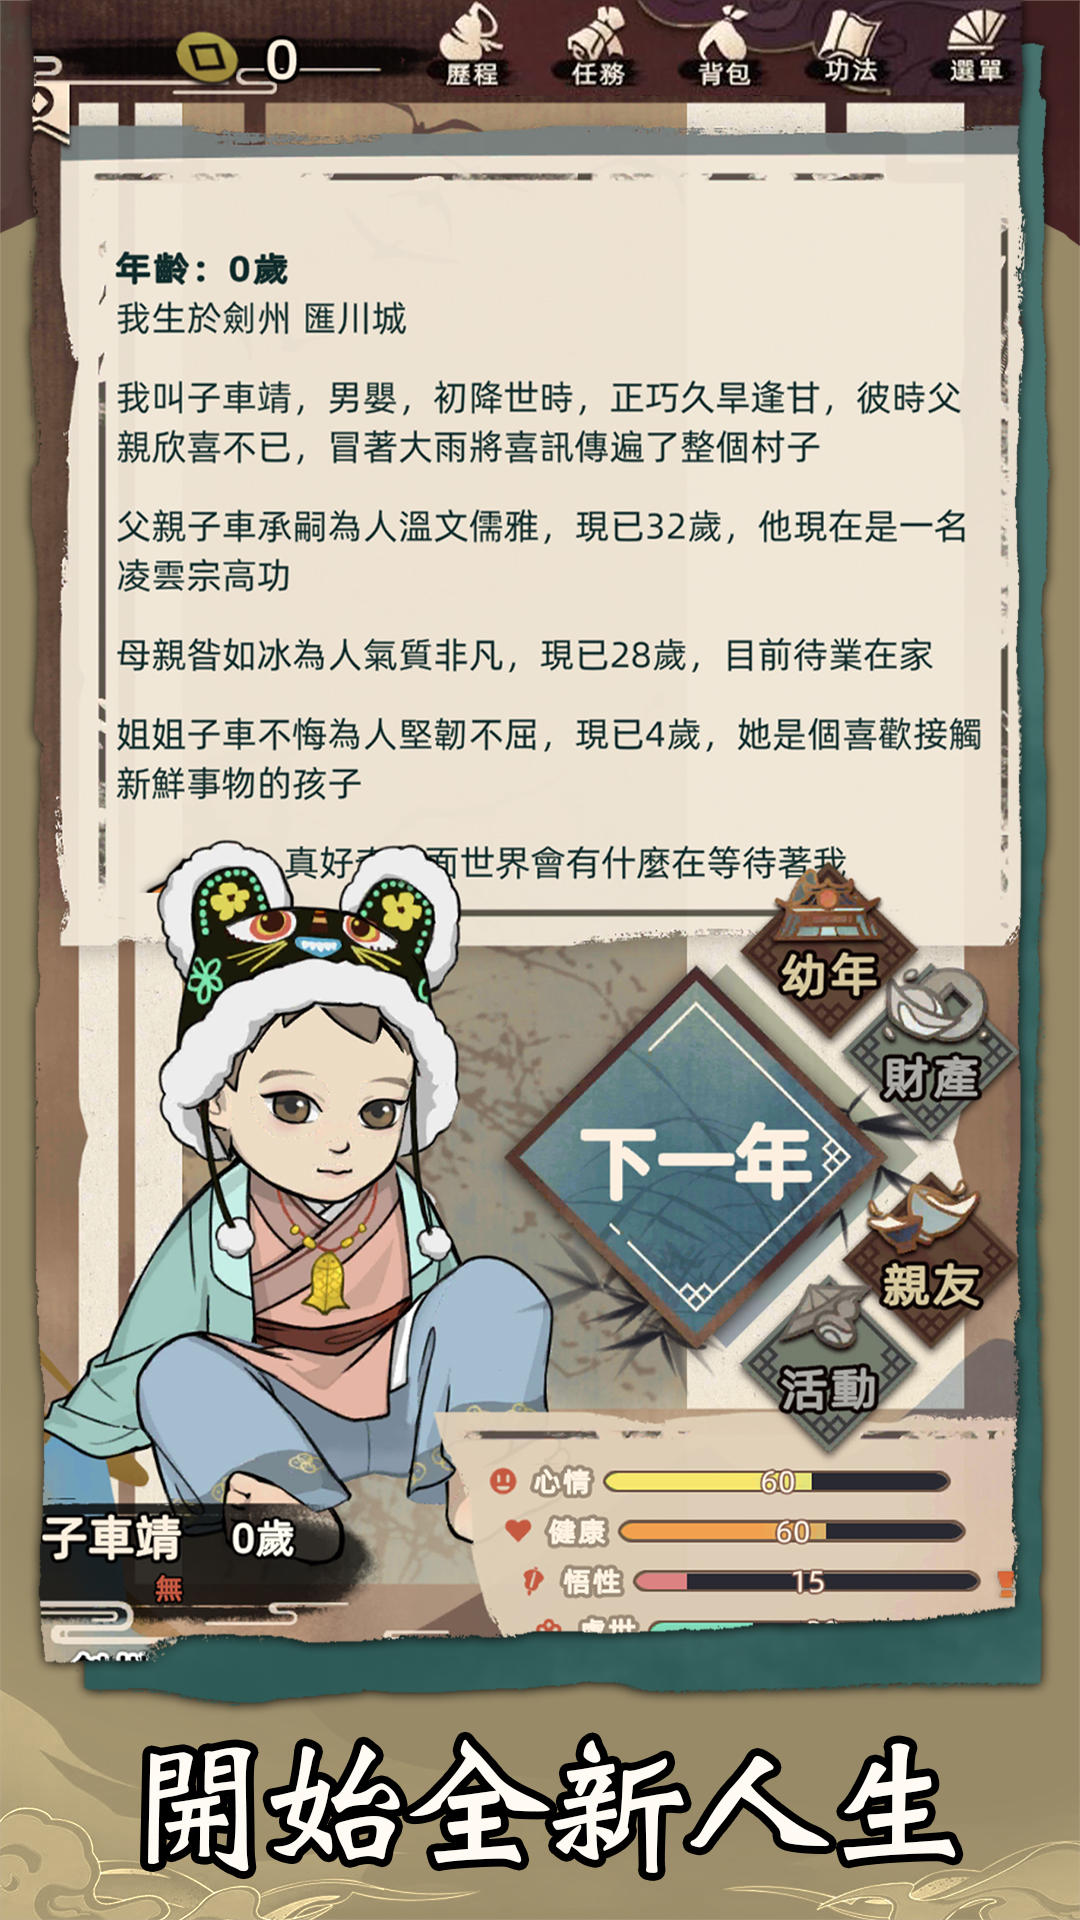 Screenshot 1 of កម្មវិធីត្រាប់តាមជីវិត Jianghu 0.4.4